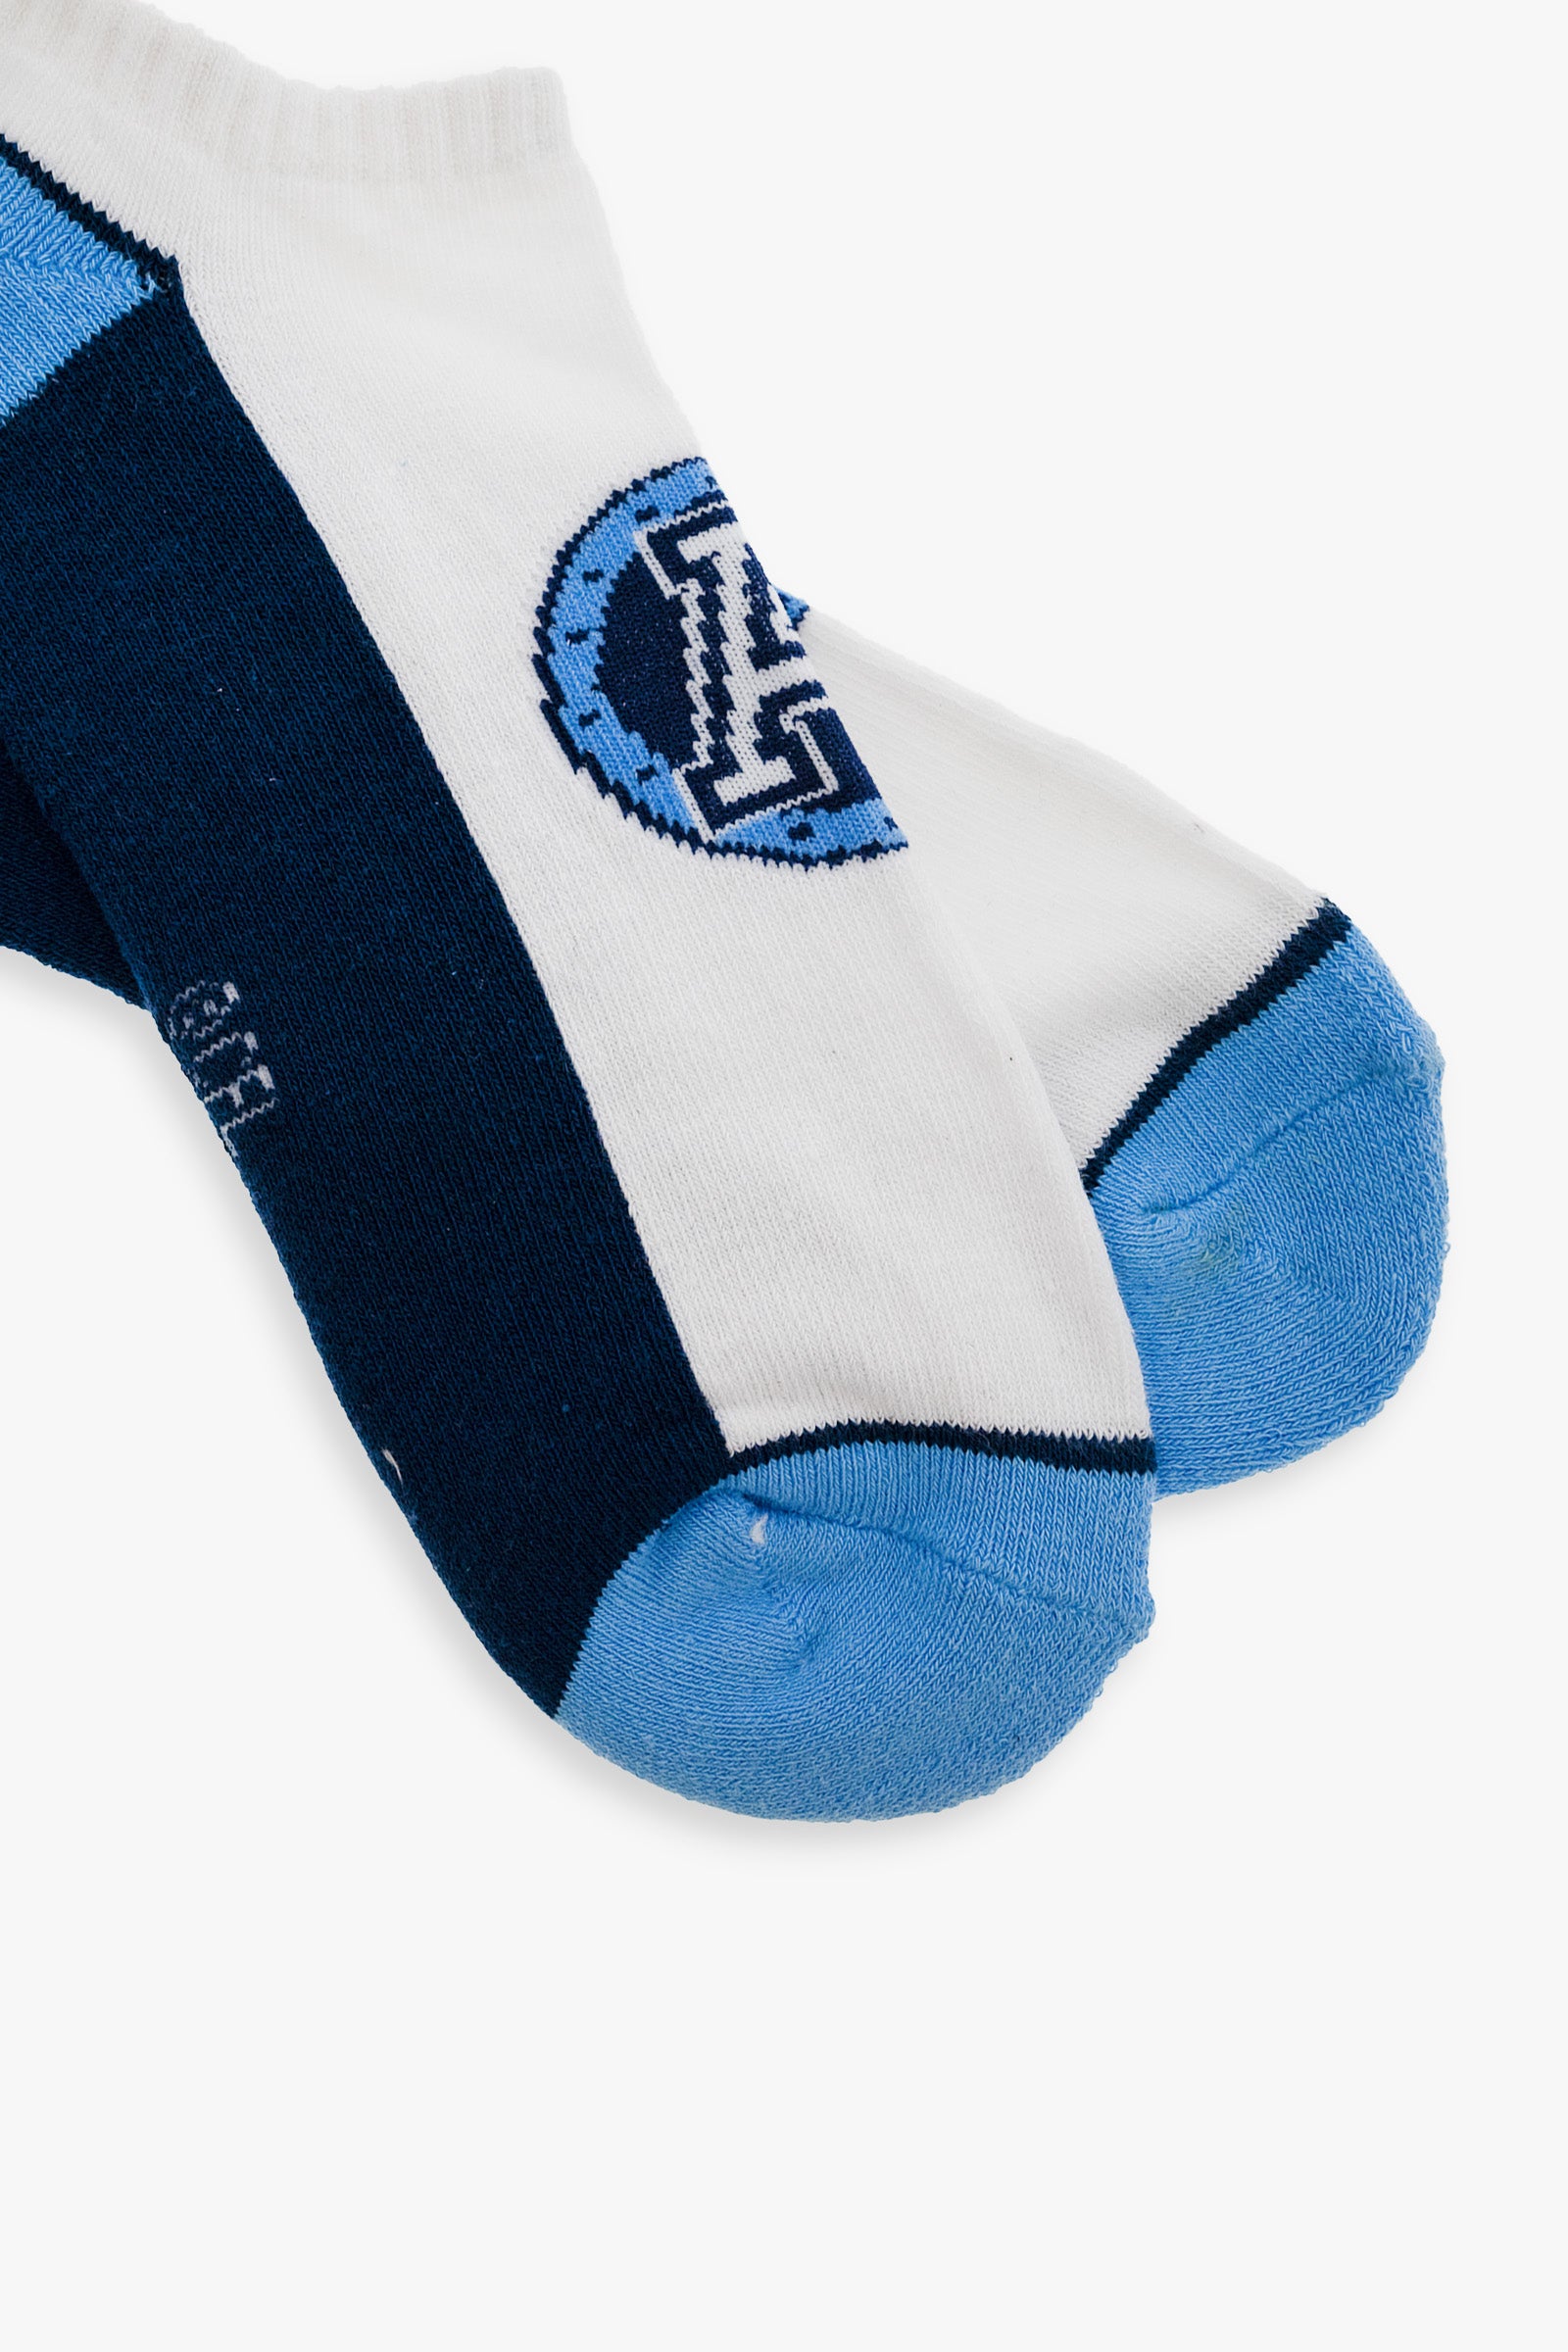 Gertex CFL Mens 3-Pack Ankle Socks